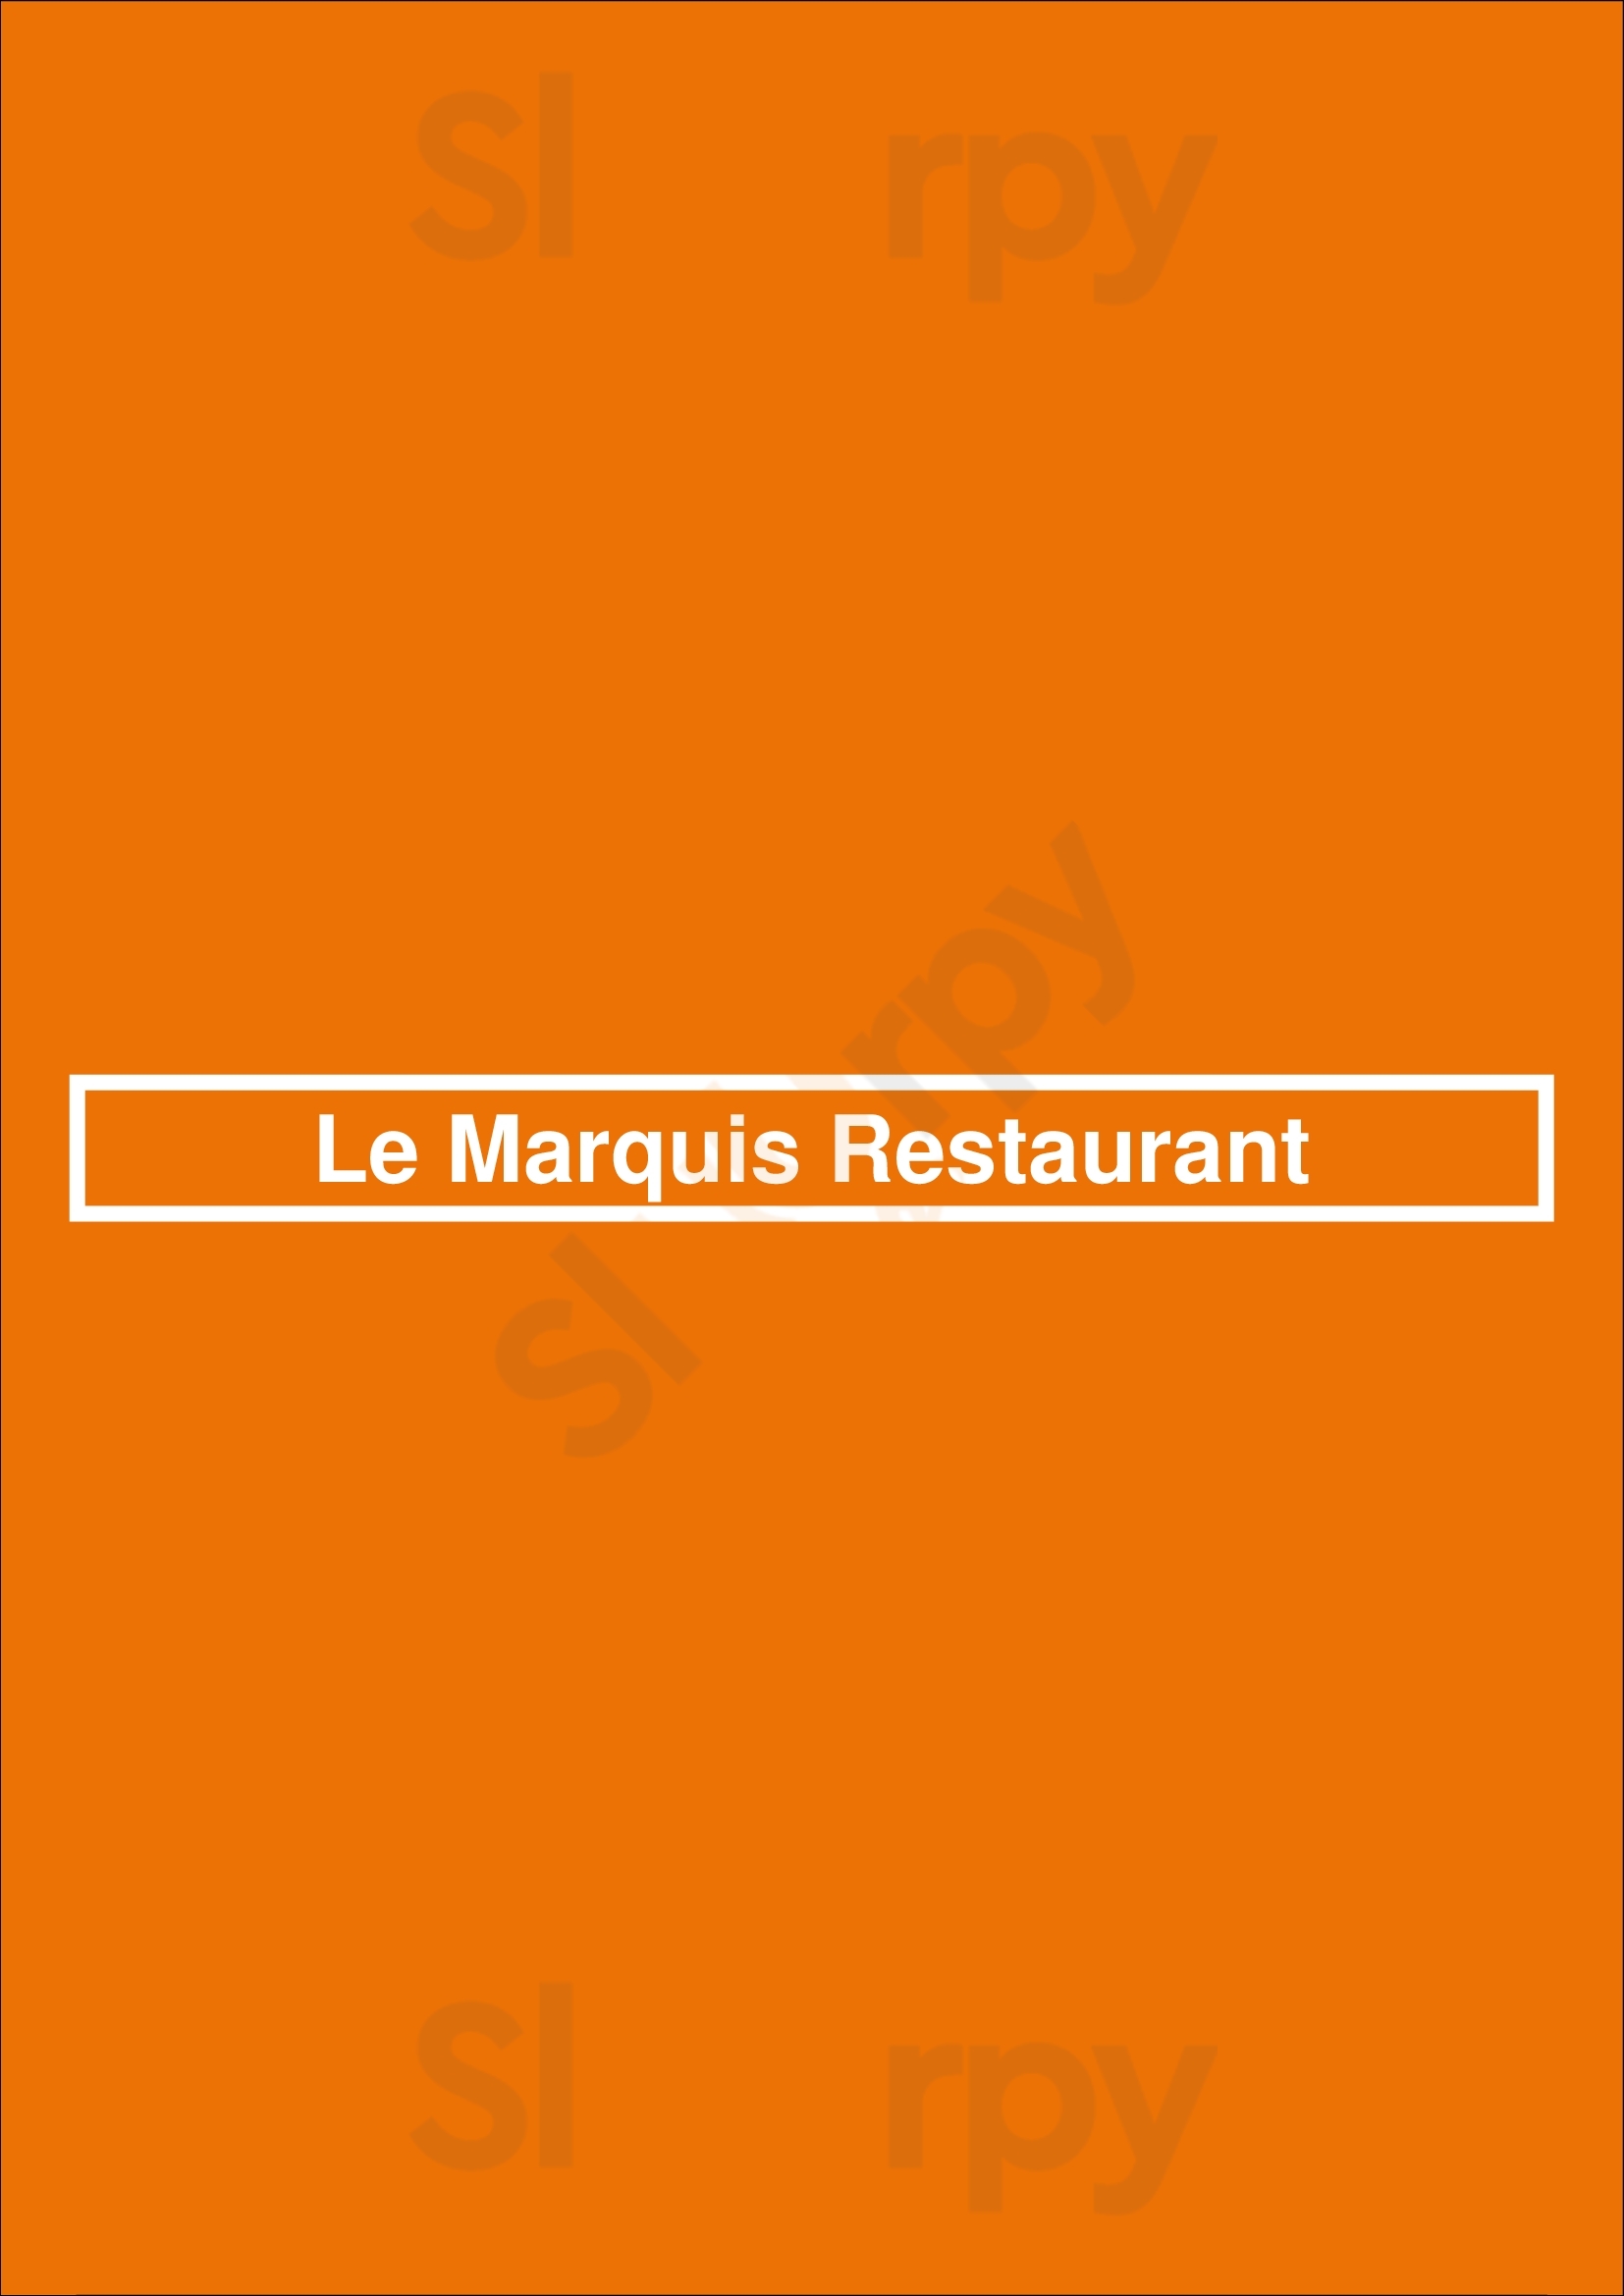 Le Marquis Restaurant Santa Barbara de Nexe Menu - 1